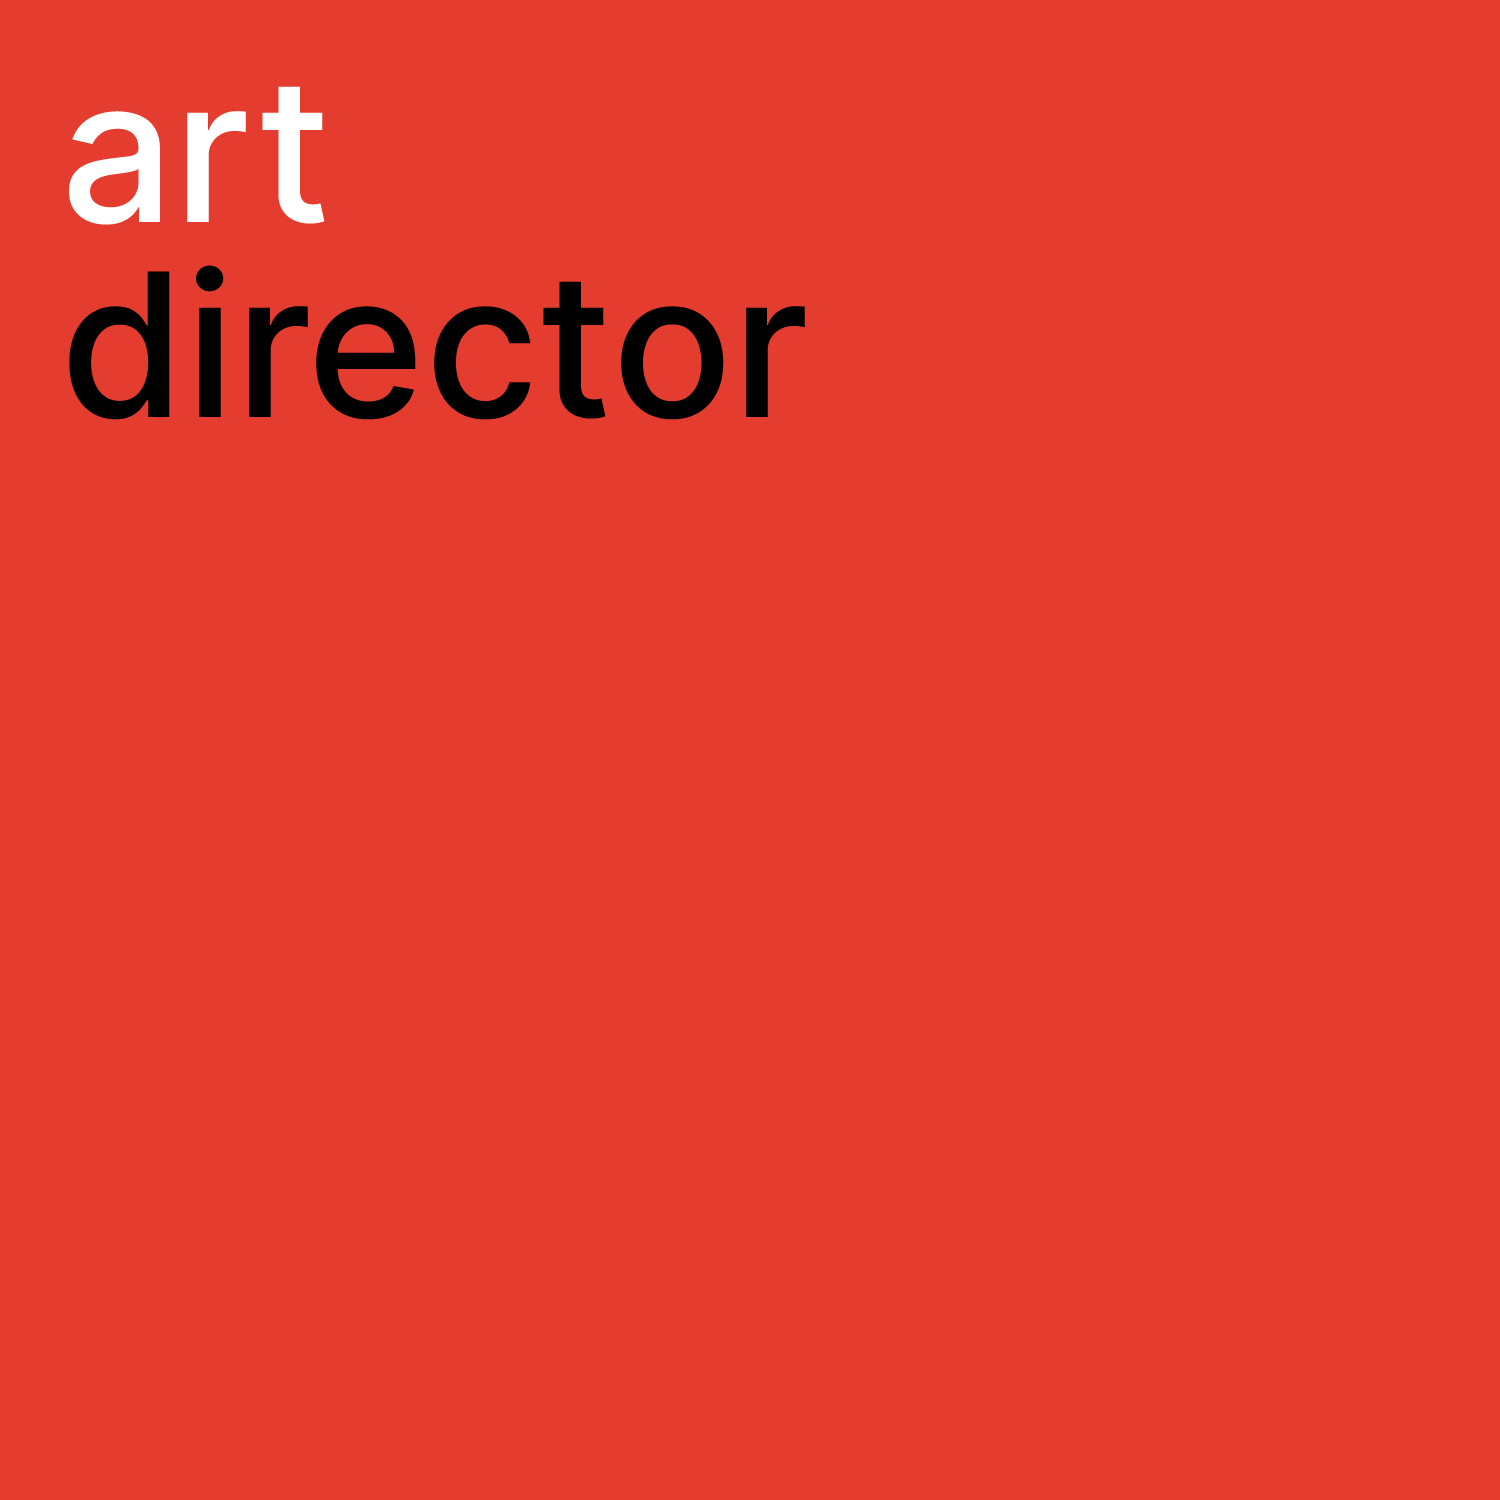 art director hiring cover